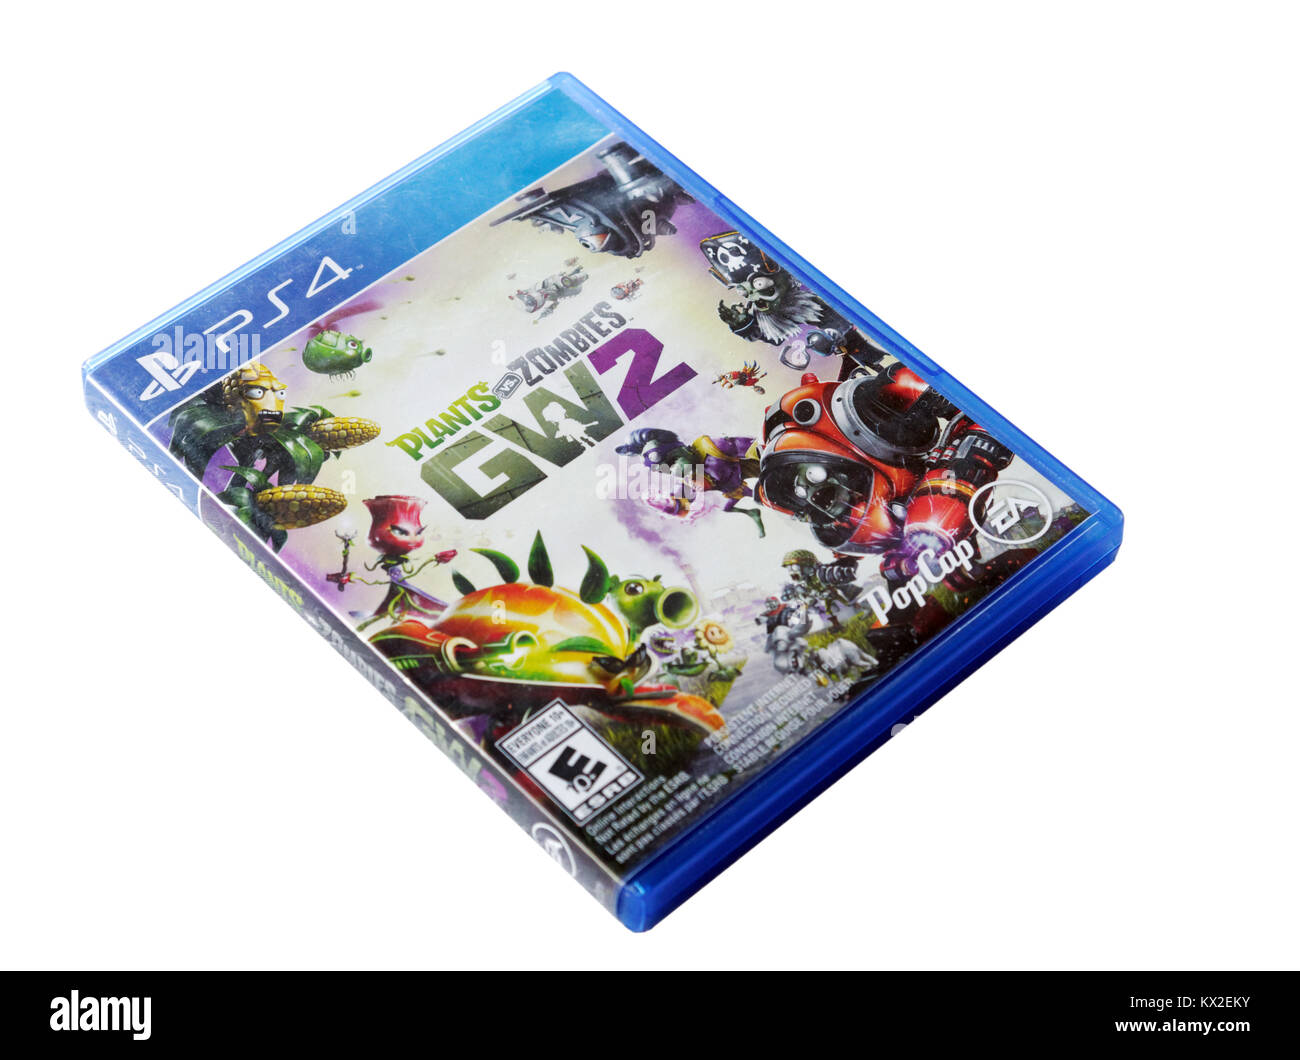 Sony PlayStation 4 game Plants vs Zombies Stock Photo - Alamy